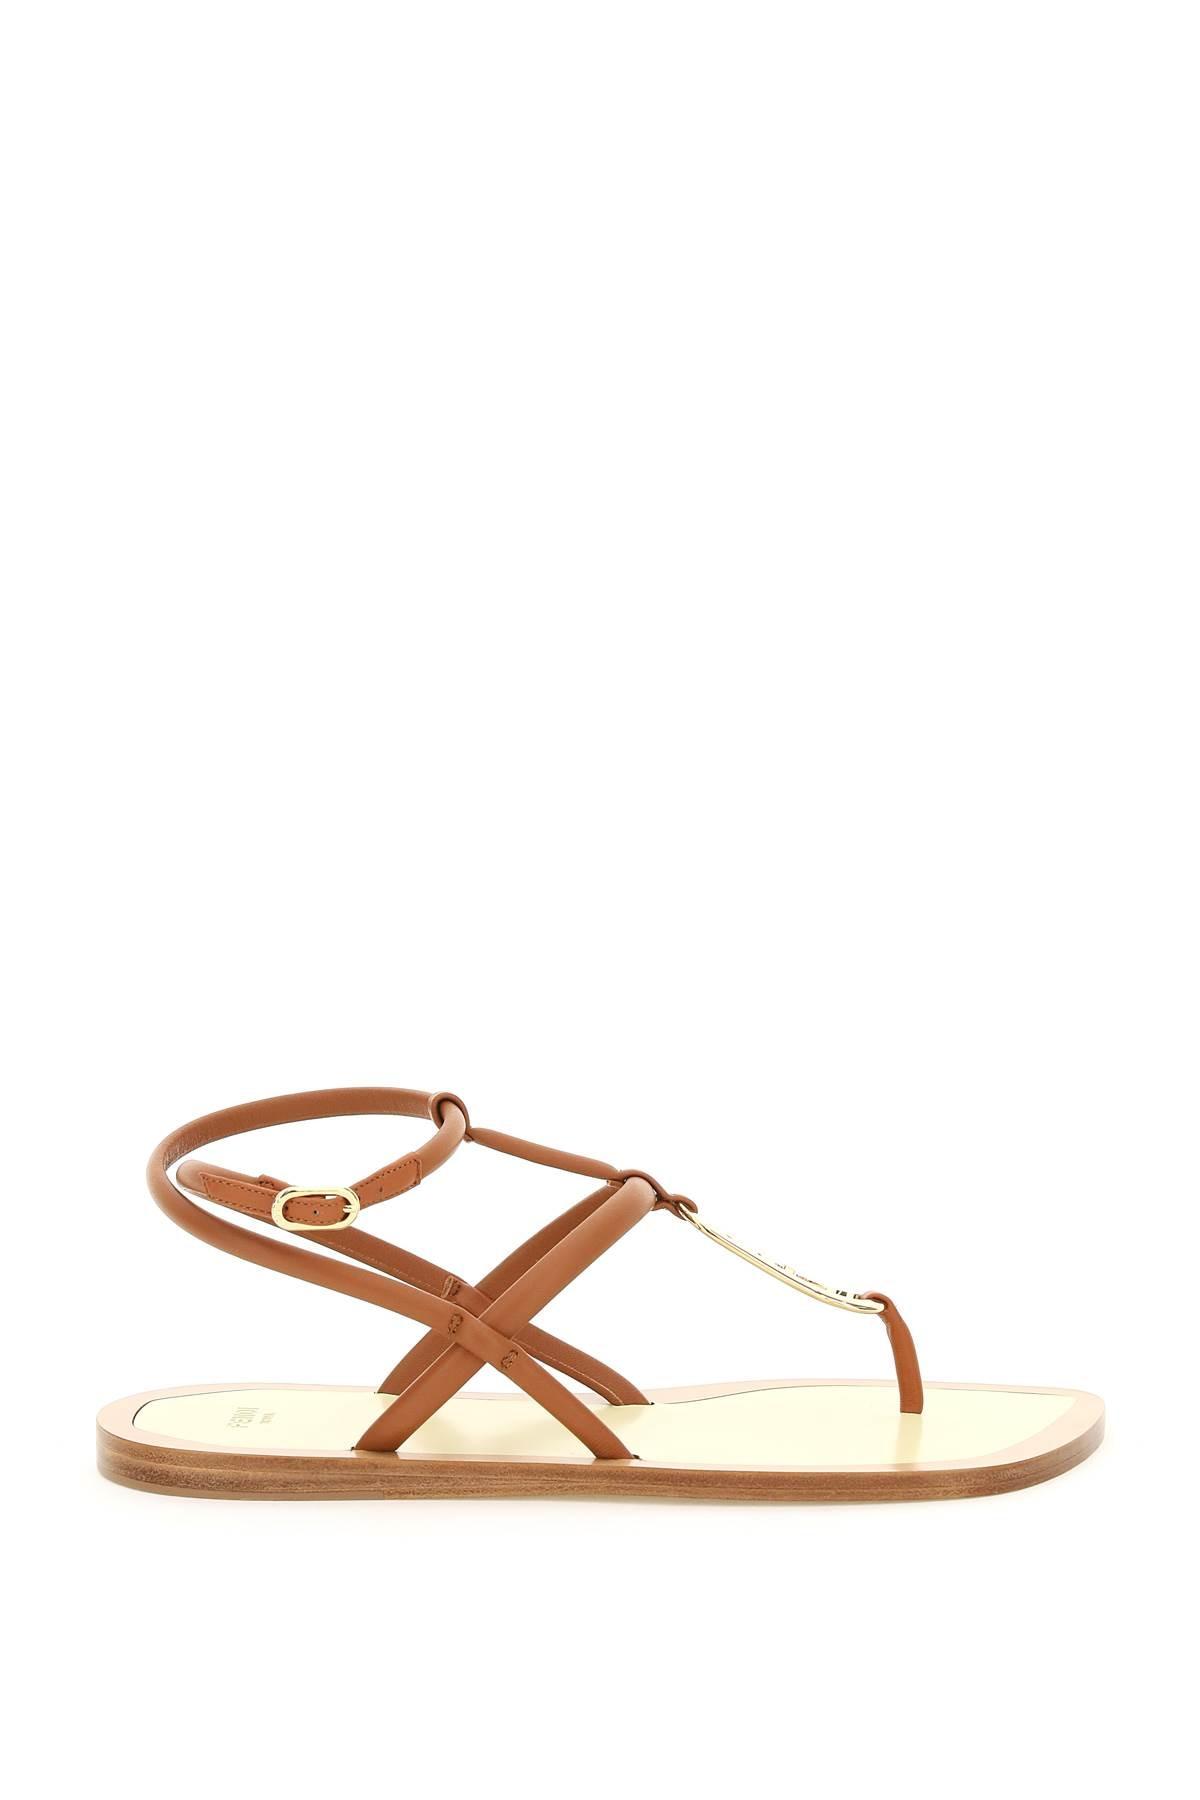 Fendi O'lock Sandals in Brown | Lyst